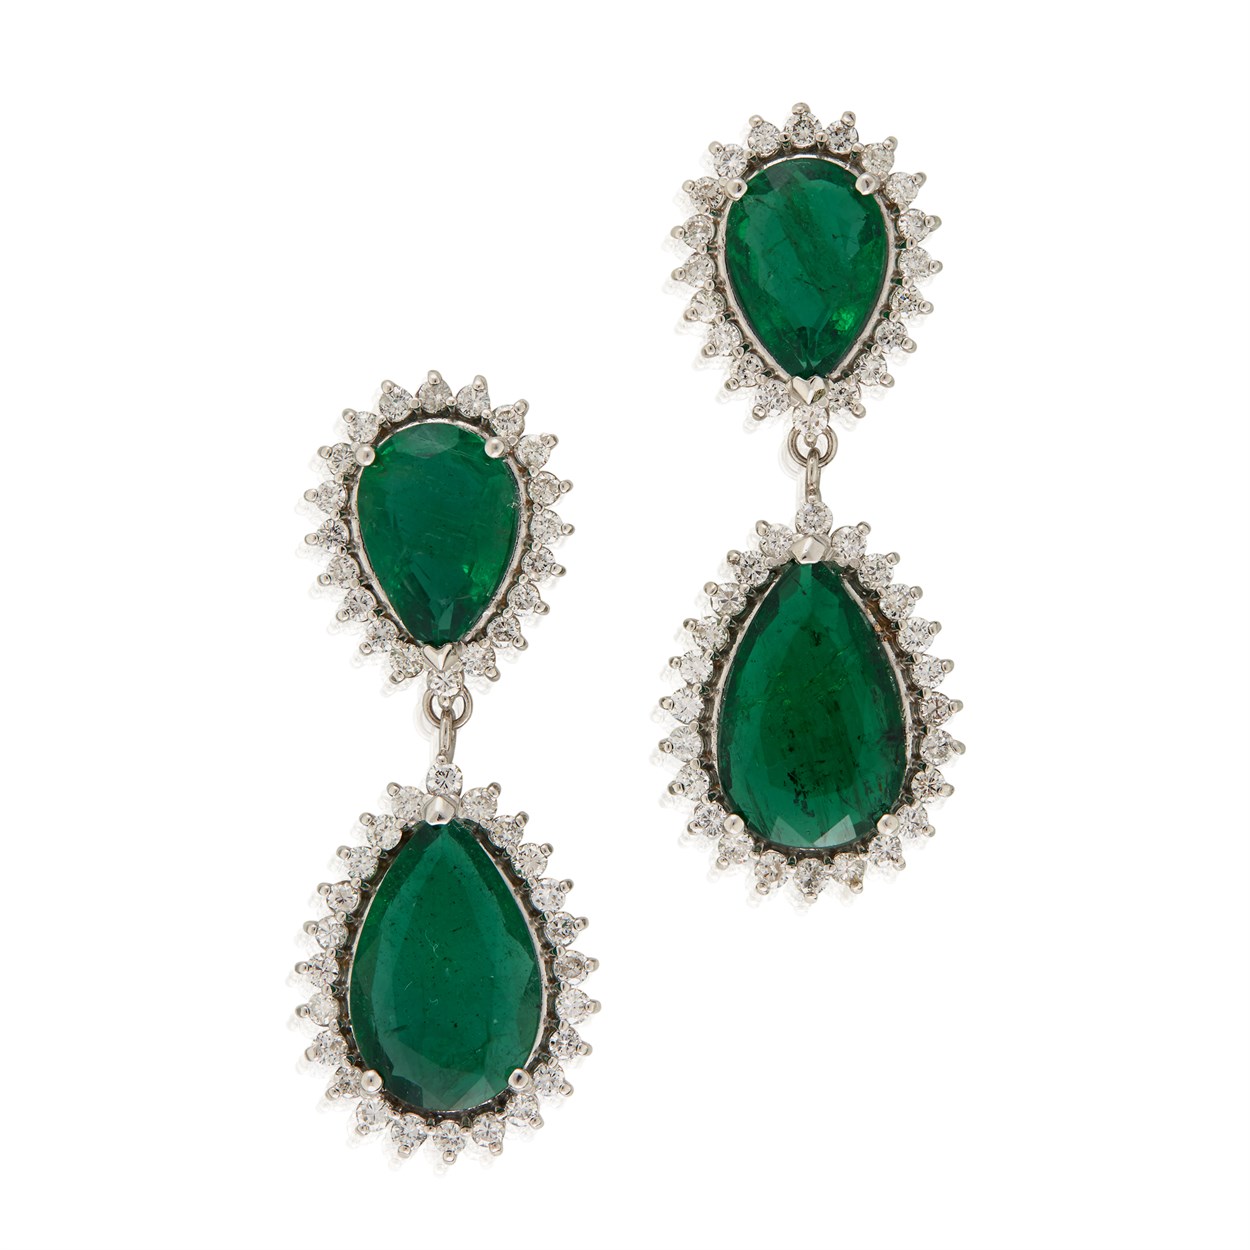 Lot 70 - A pair of emerald, diamond, and eighteen karat white gold earrings